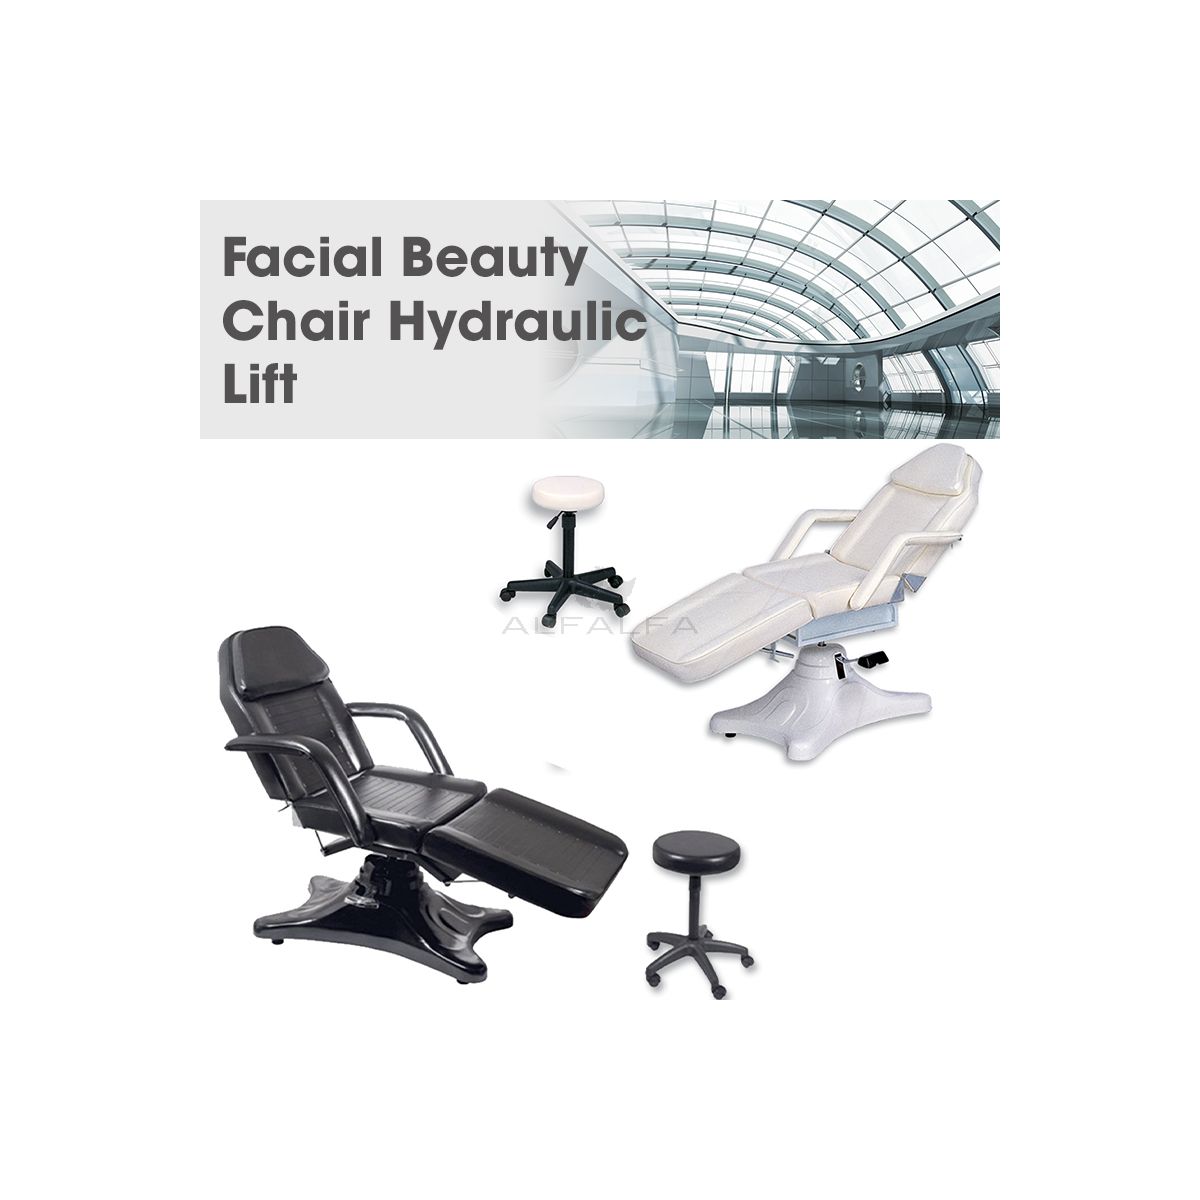 Facial Beauty Chair Hydraulic Lift